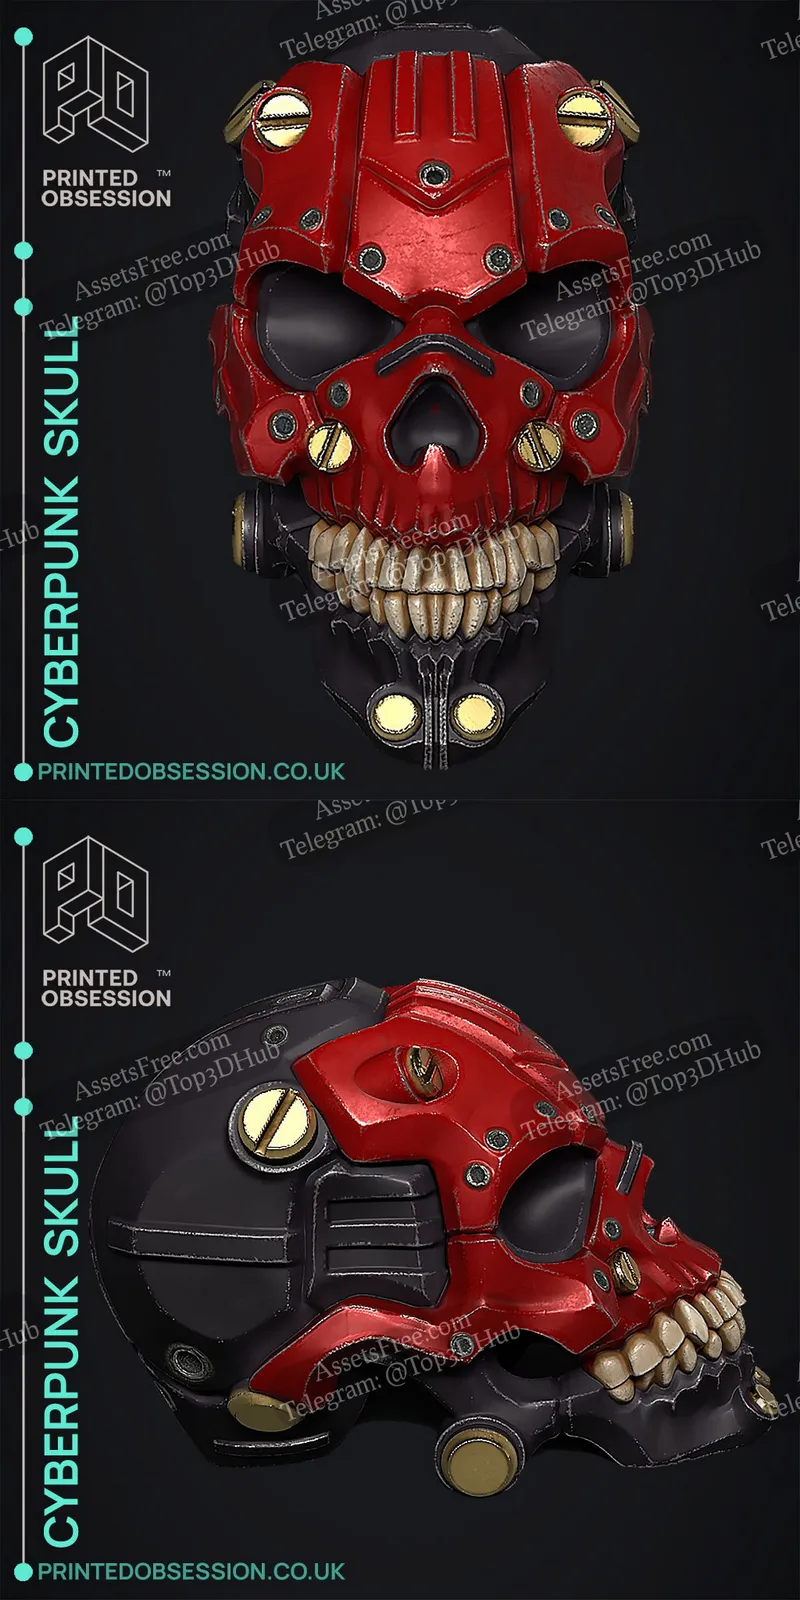 Mecha Skull ‣ 3D print model ‣ AssetsFree.com